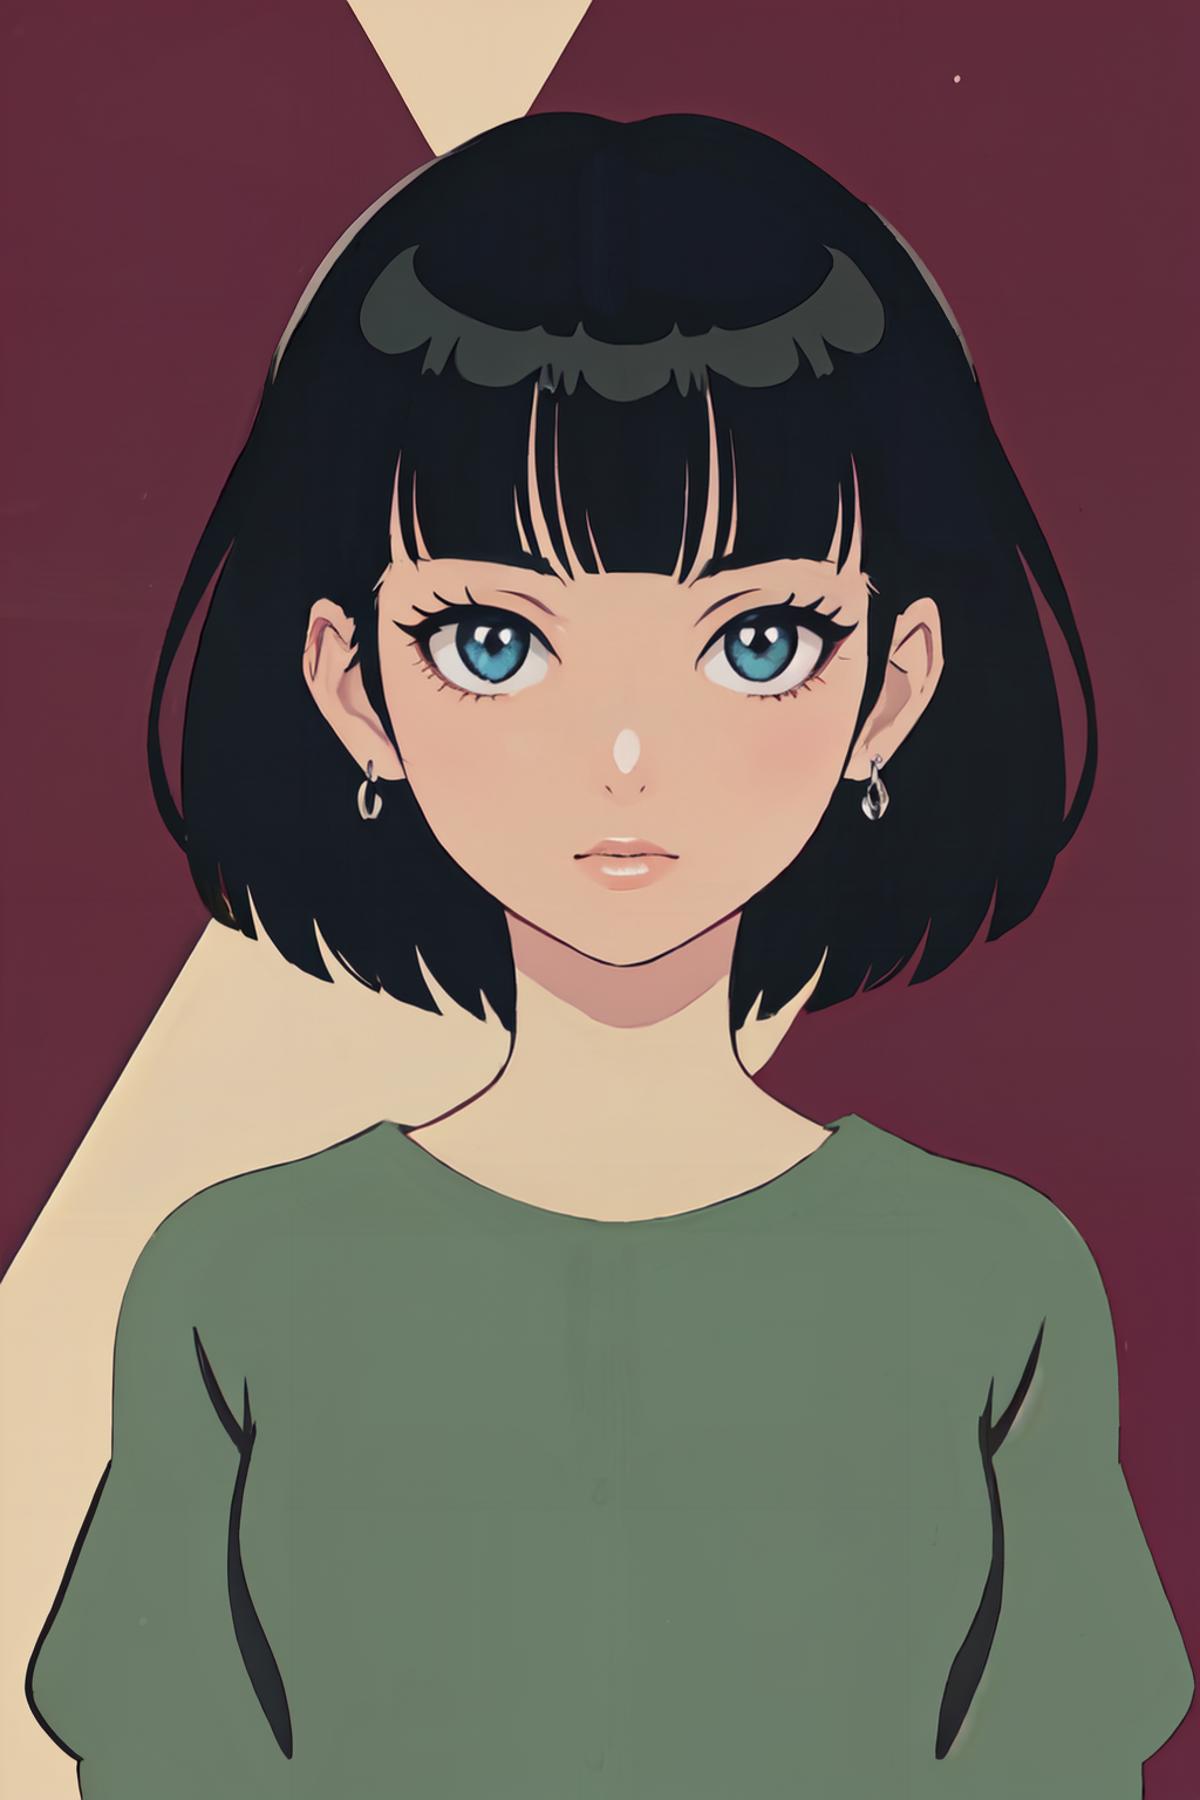 Minimalist Anime Style image by kokurine